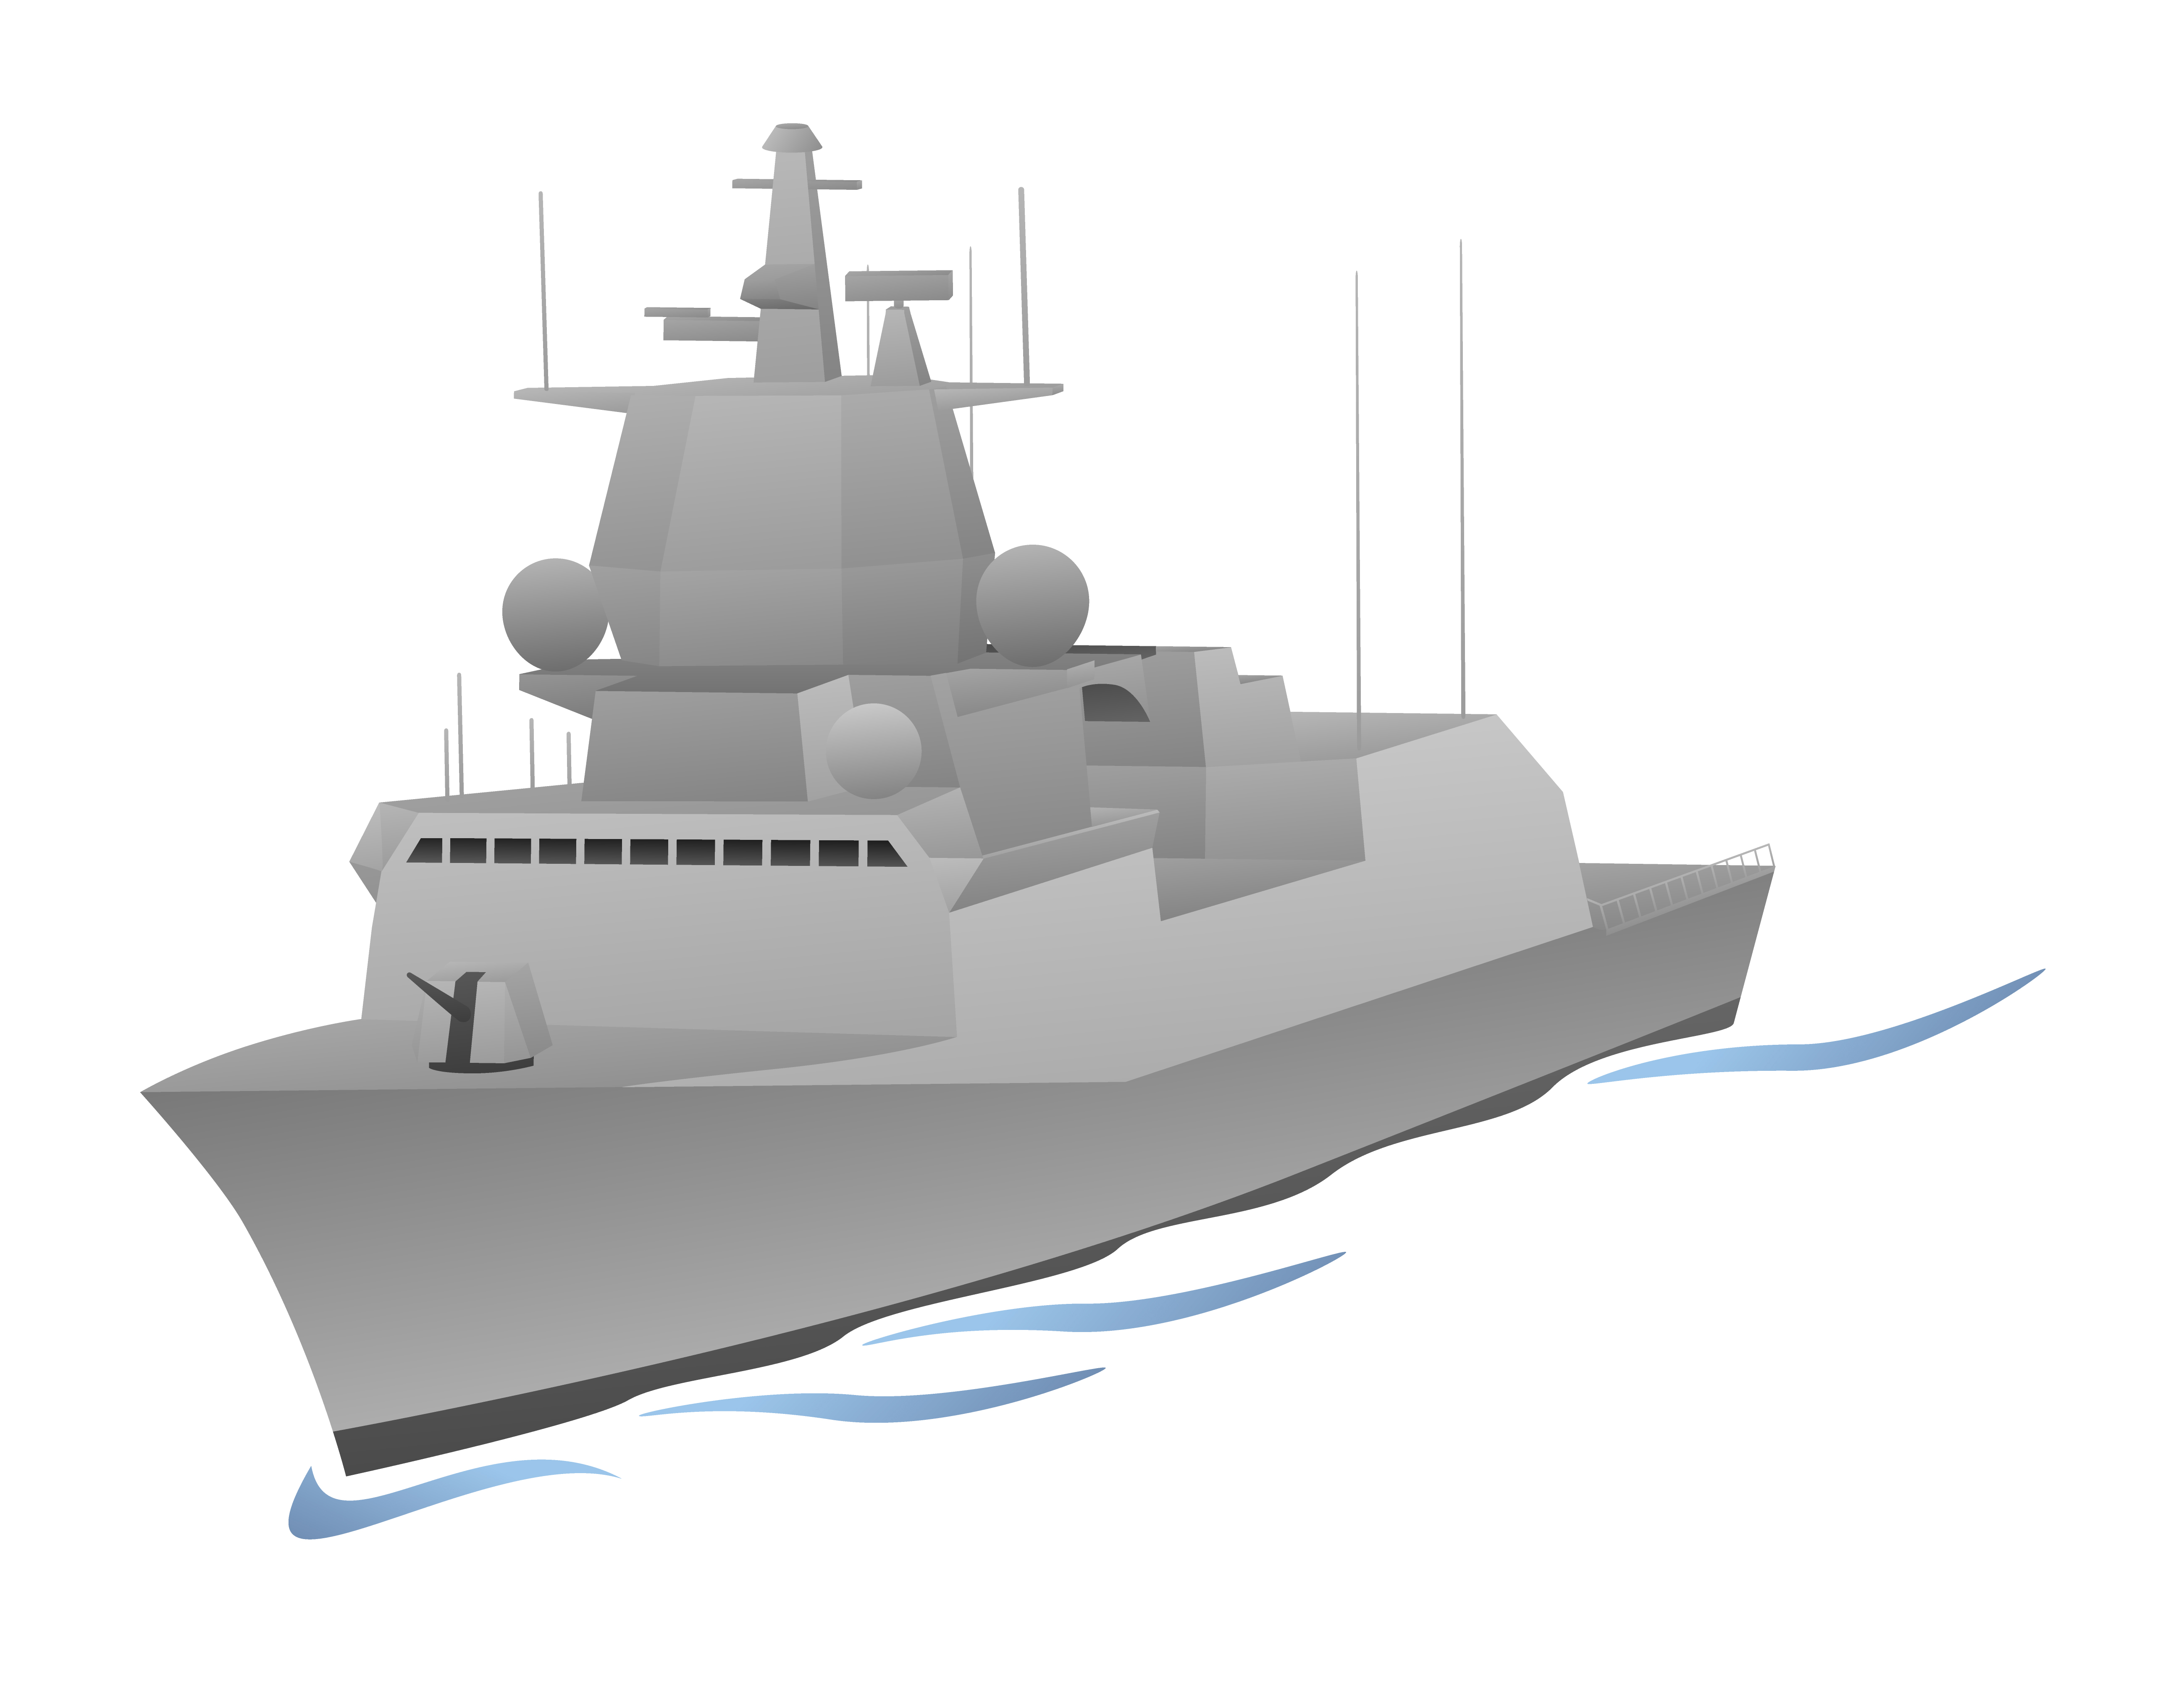 Naval warship vector graphic 491895 - Download Free Vectors, Clipart